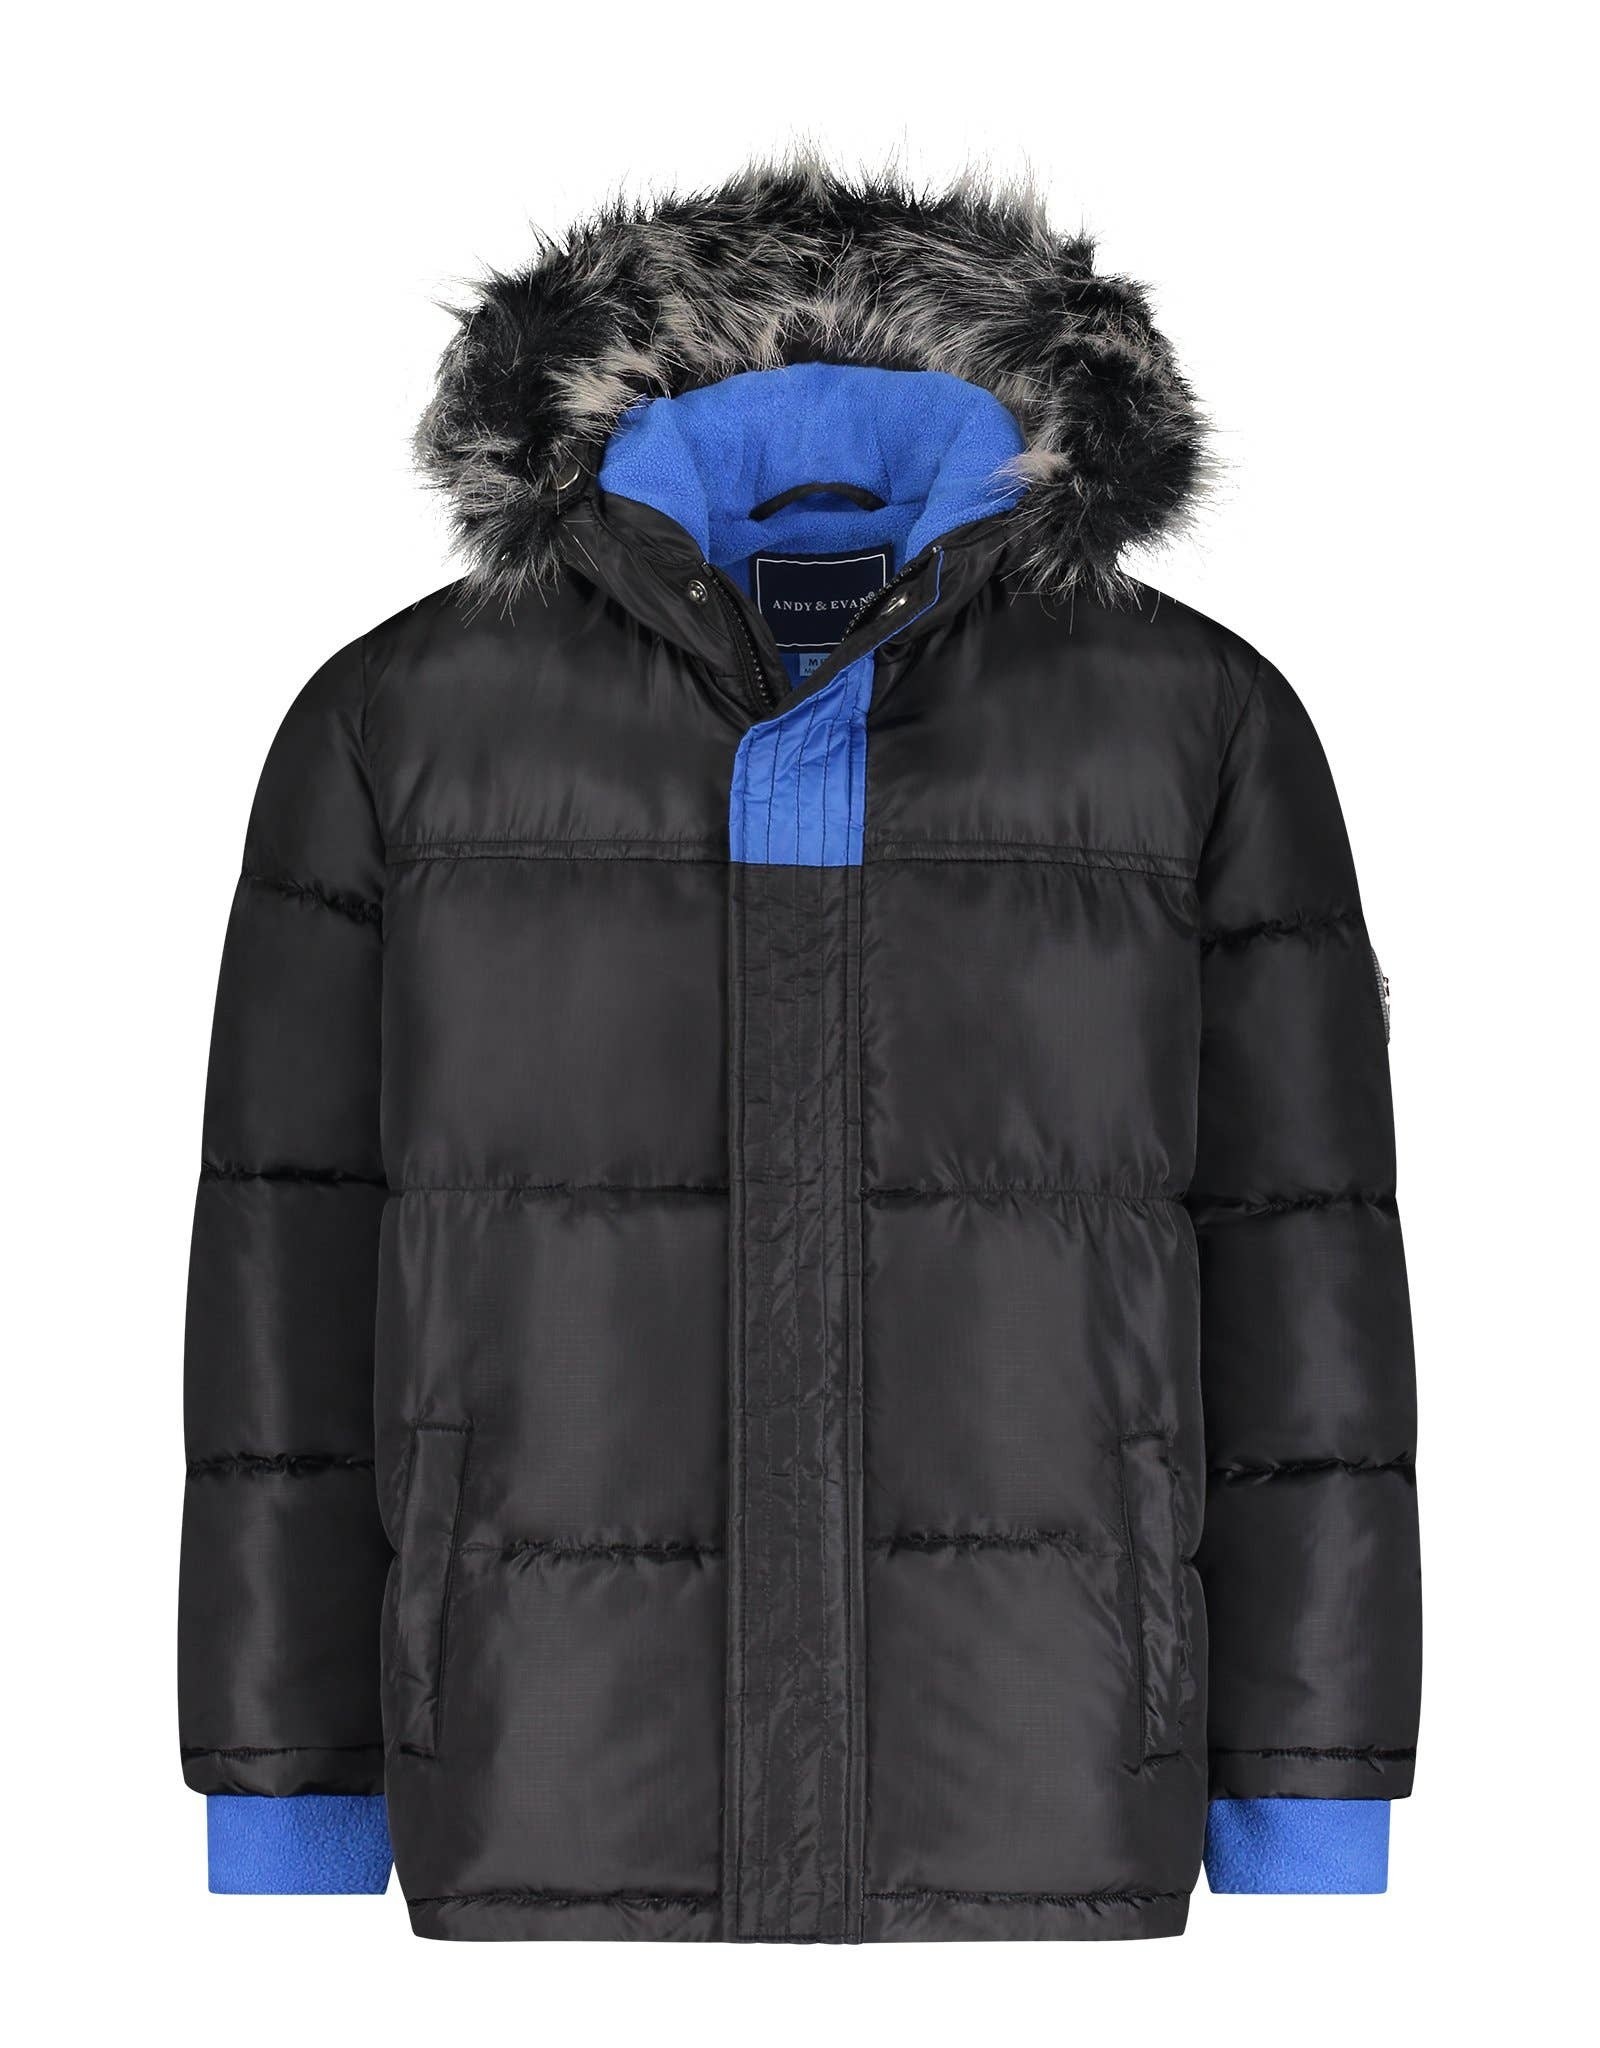 Boys Nordic Coat w/Detachable Faux Fur Hood